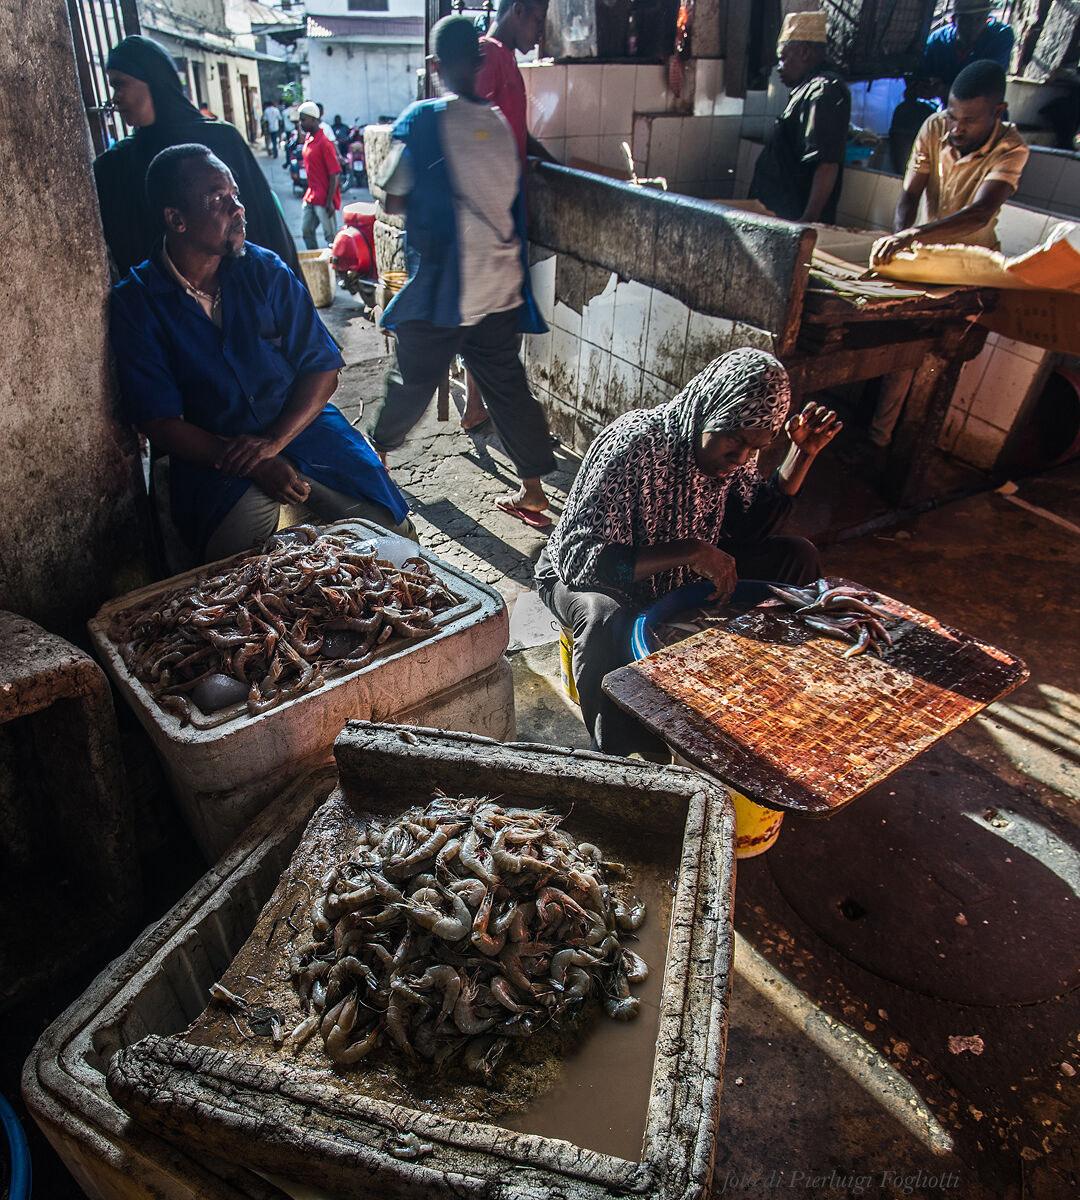 At the fish market in Stone Town (Zanzibar) - Shrimp...